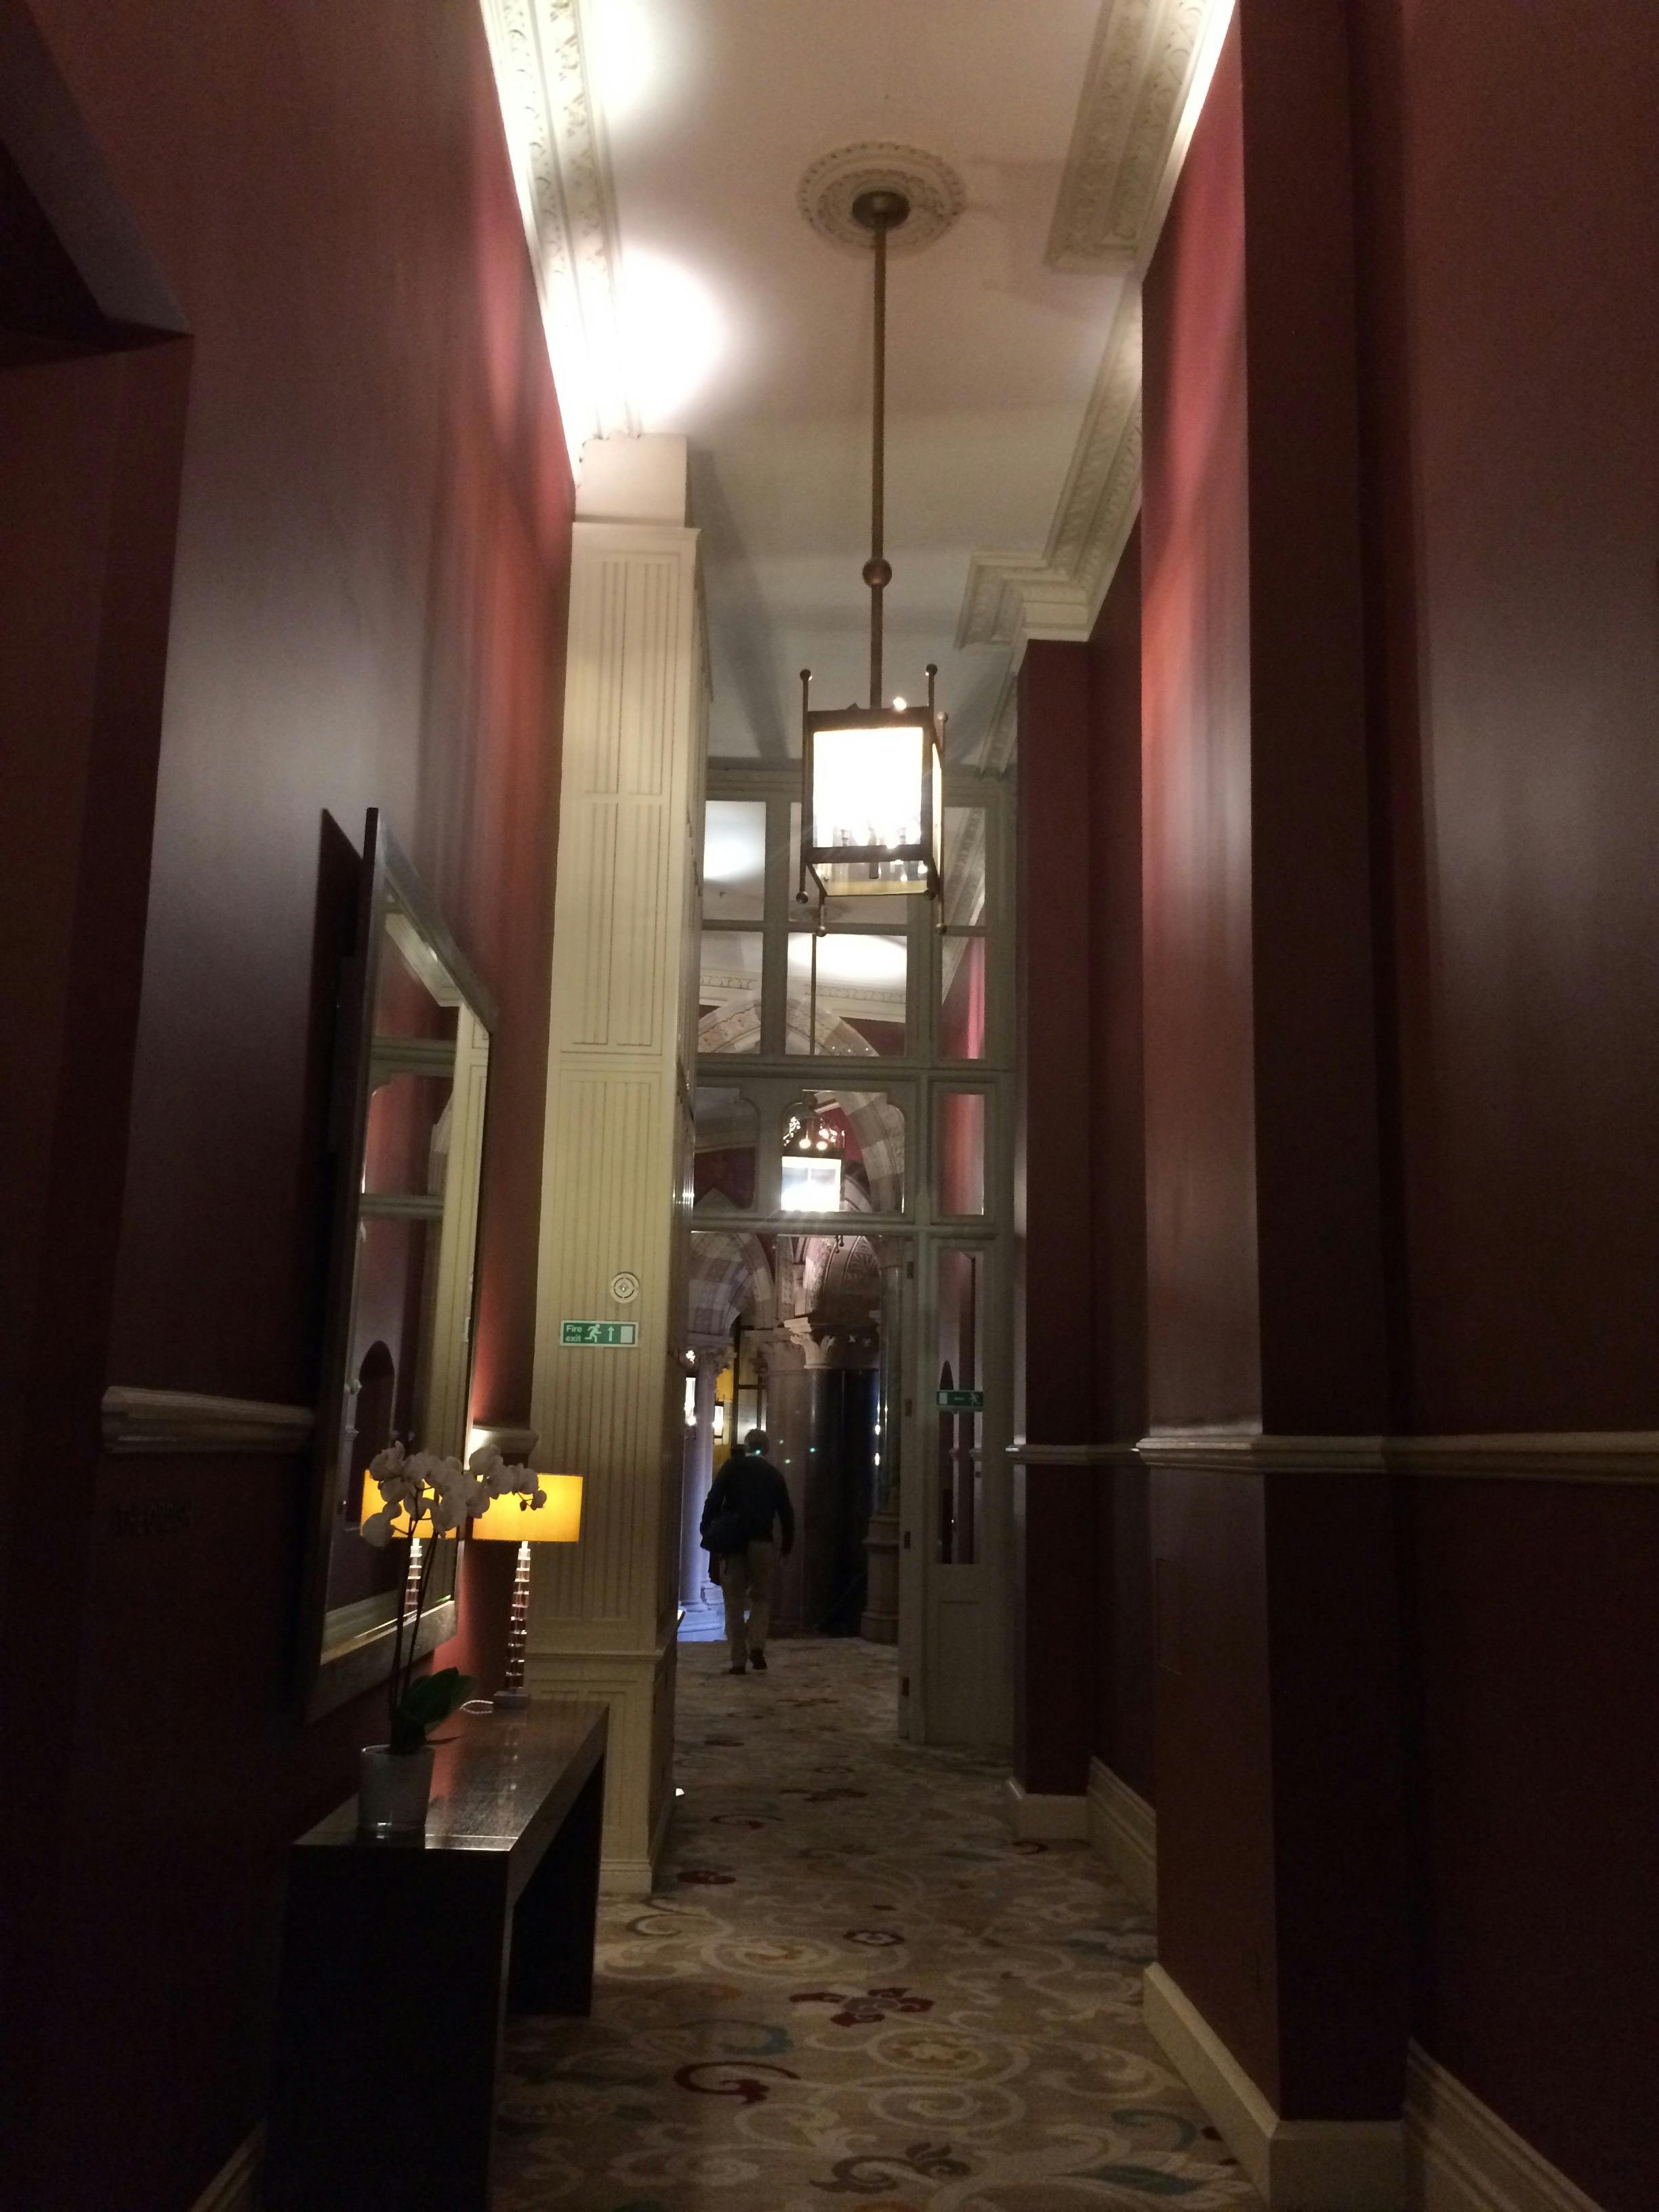 Free stock photo of St Pancras Hotel Corridor